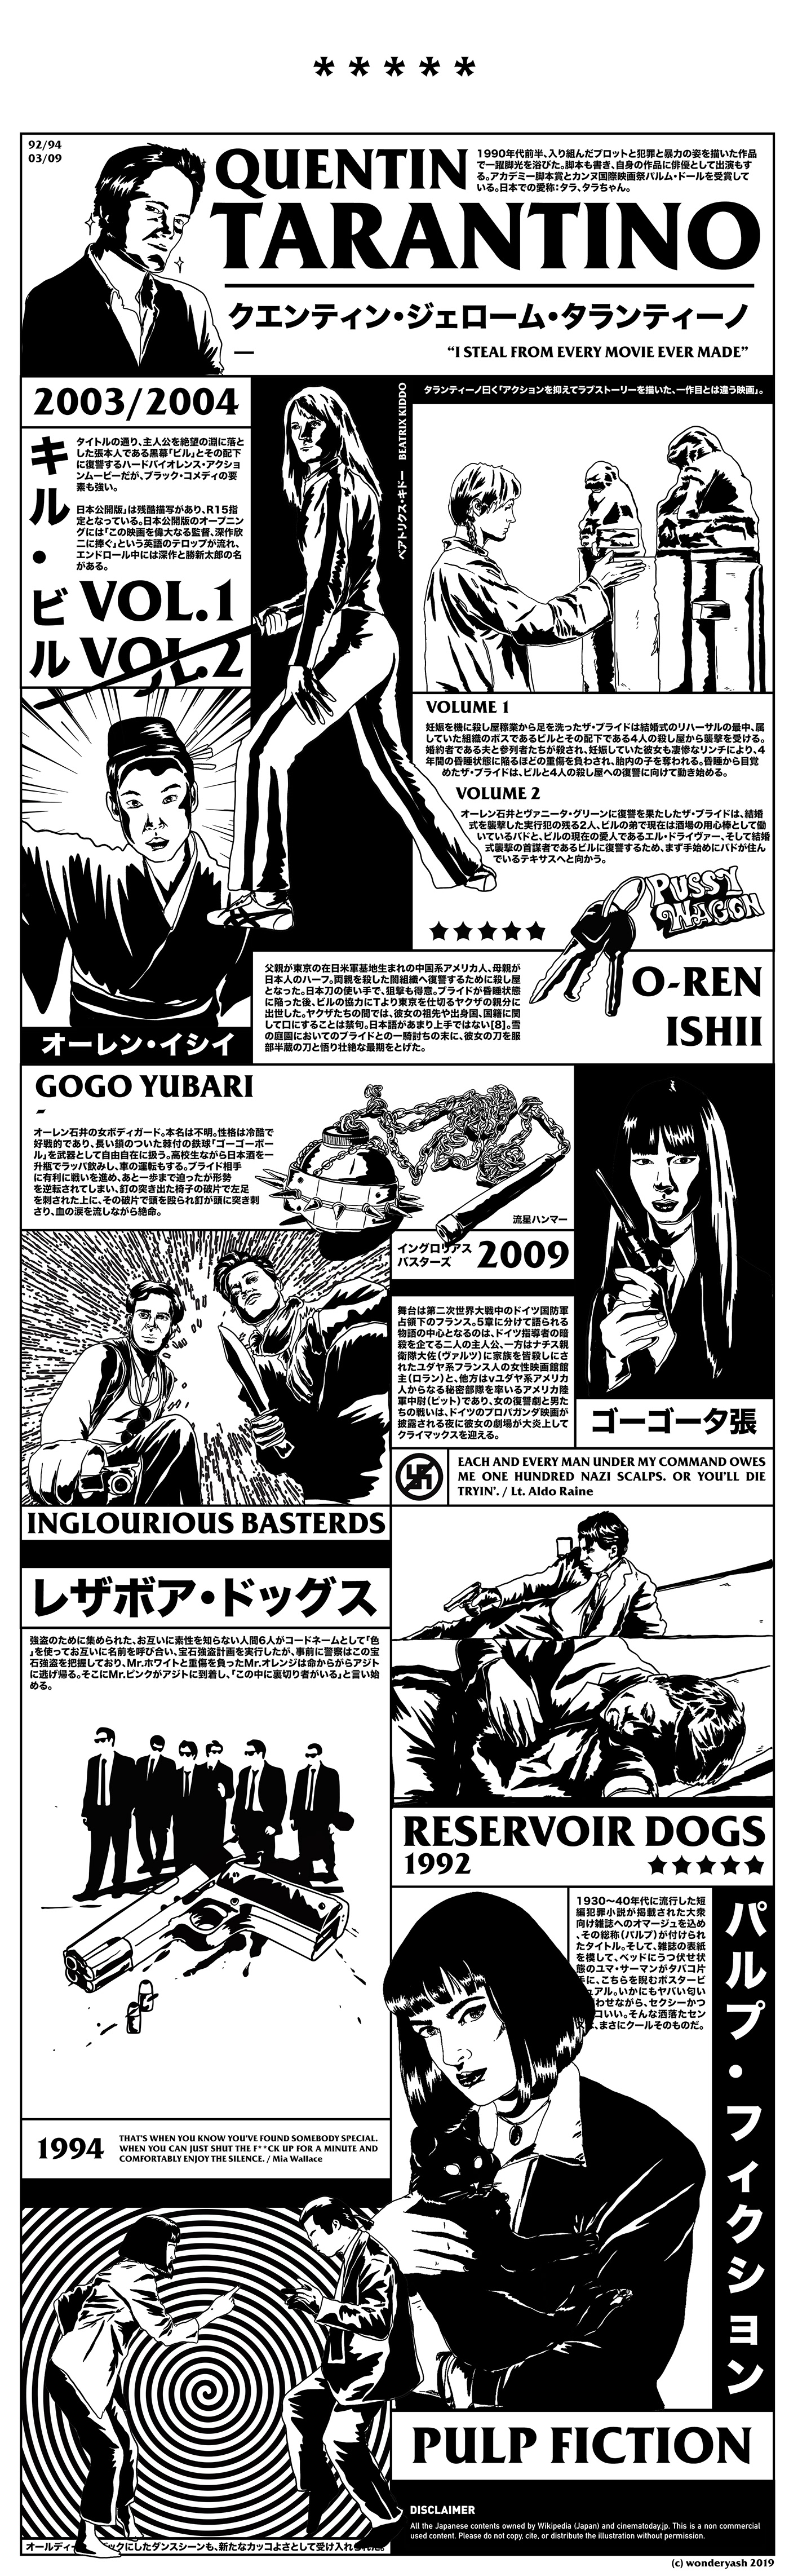 Quentin Tarantino editorial design  Japanese design japan Layout Design Japanese Layout